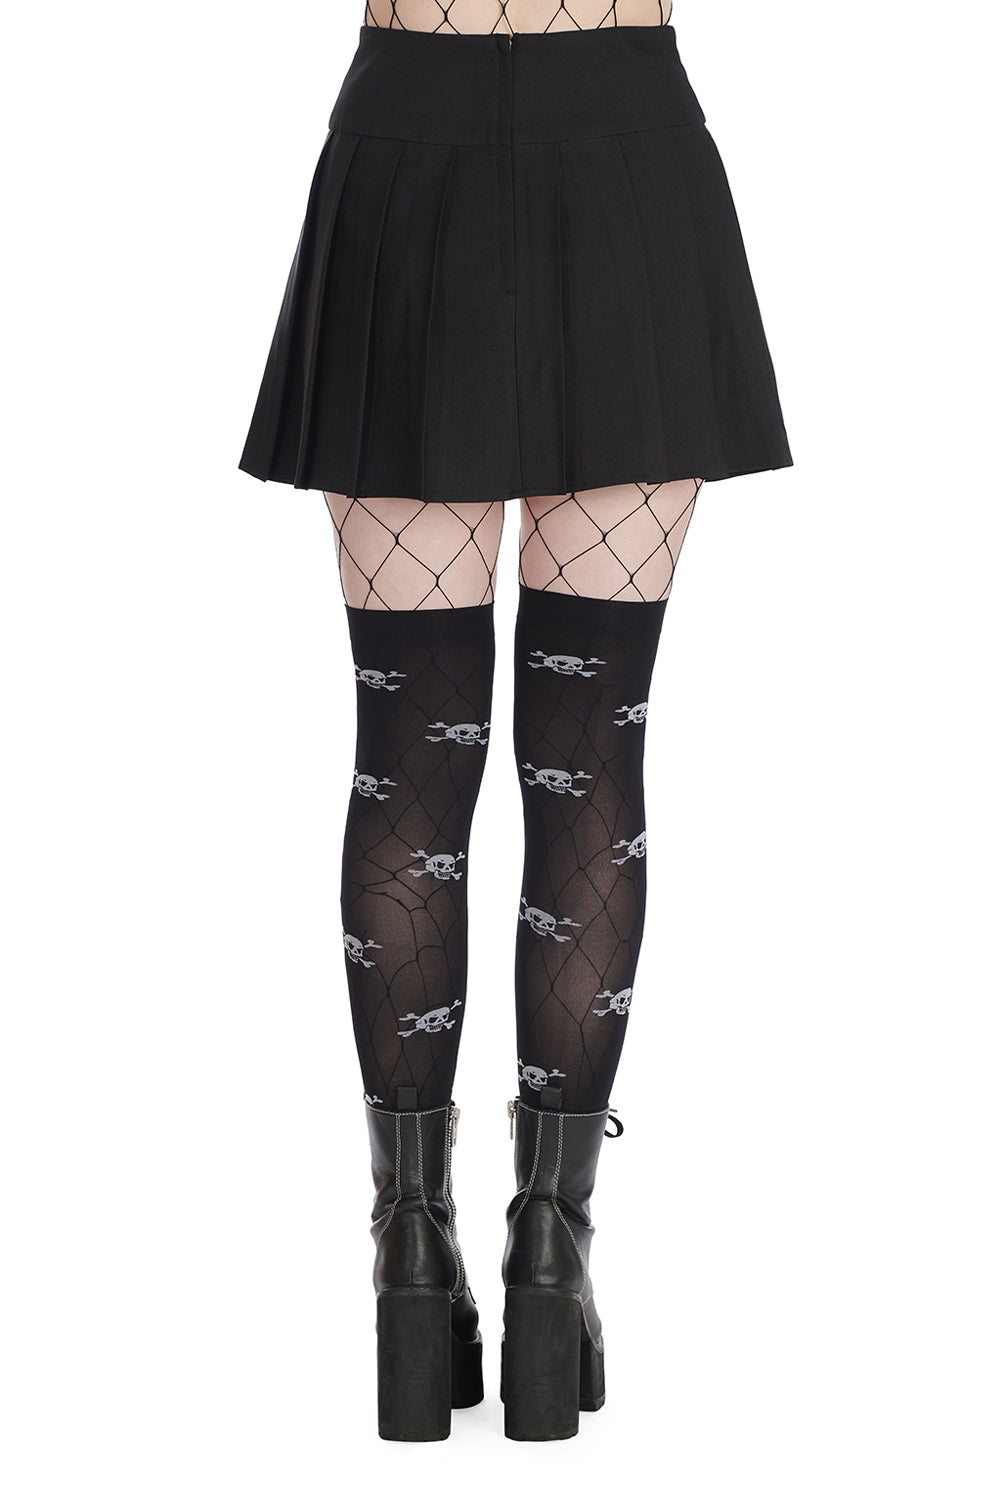 Banned Shiro Pleated Black Mini Skirt - Kate's Clothing